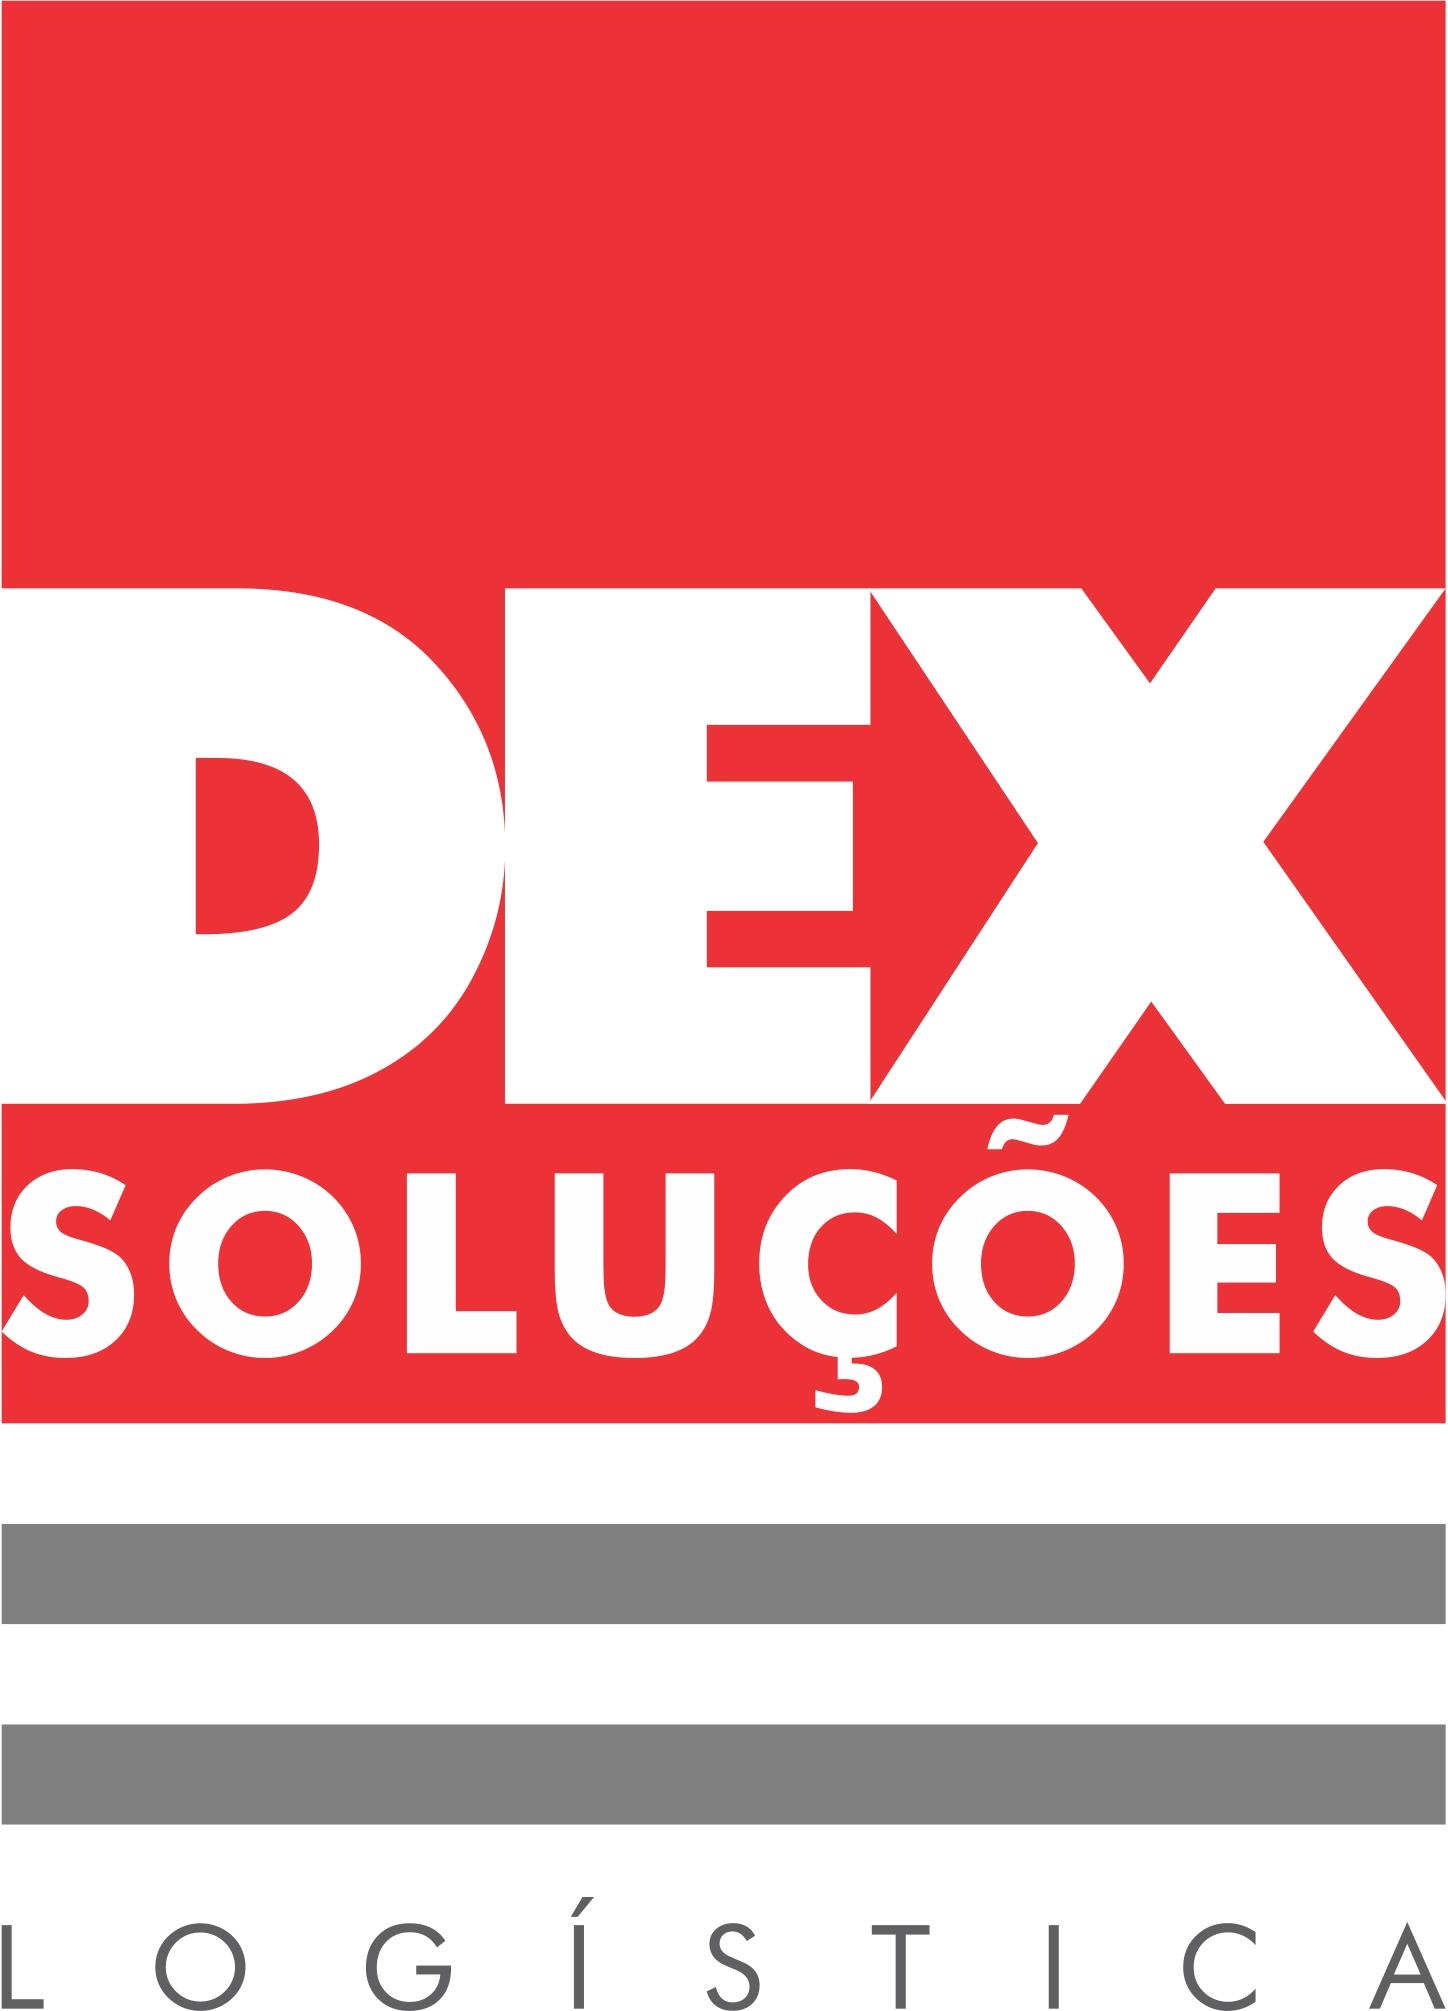 Dex & Soluções